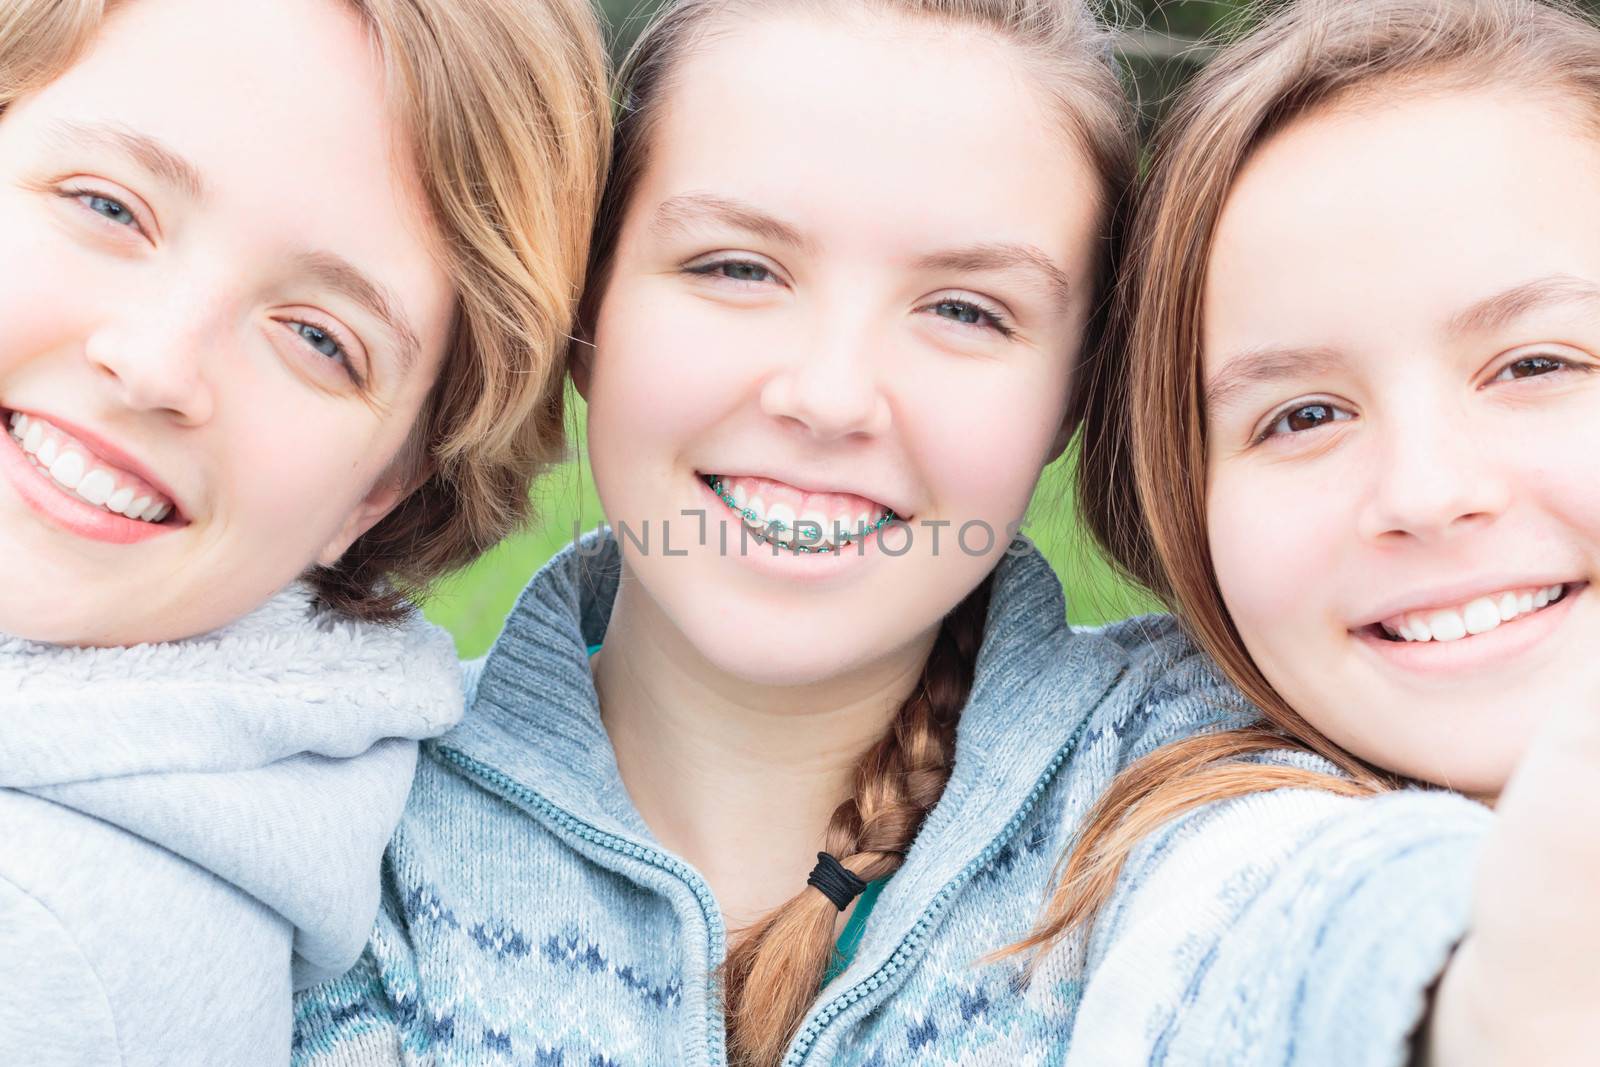 Three Cute Girls Taking a Selfie together